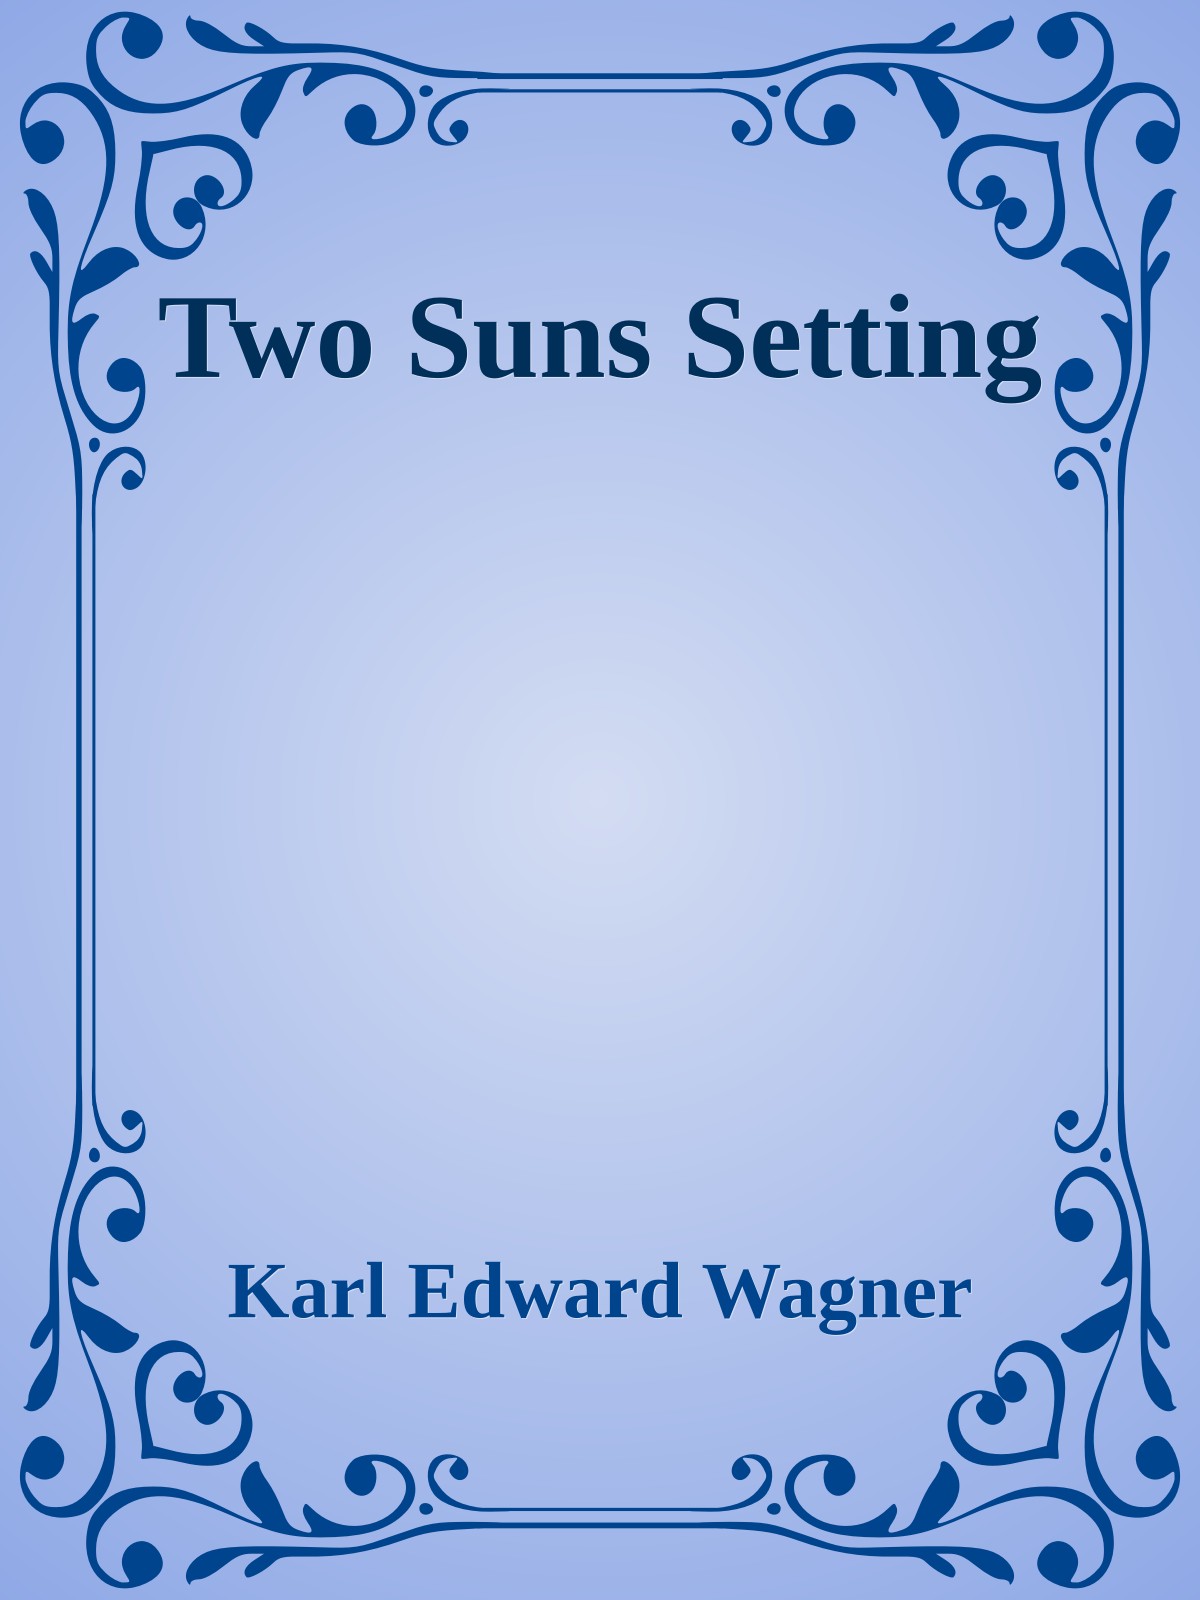 Two Suns Setting